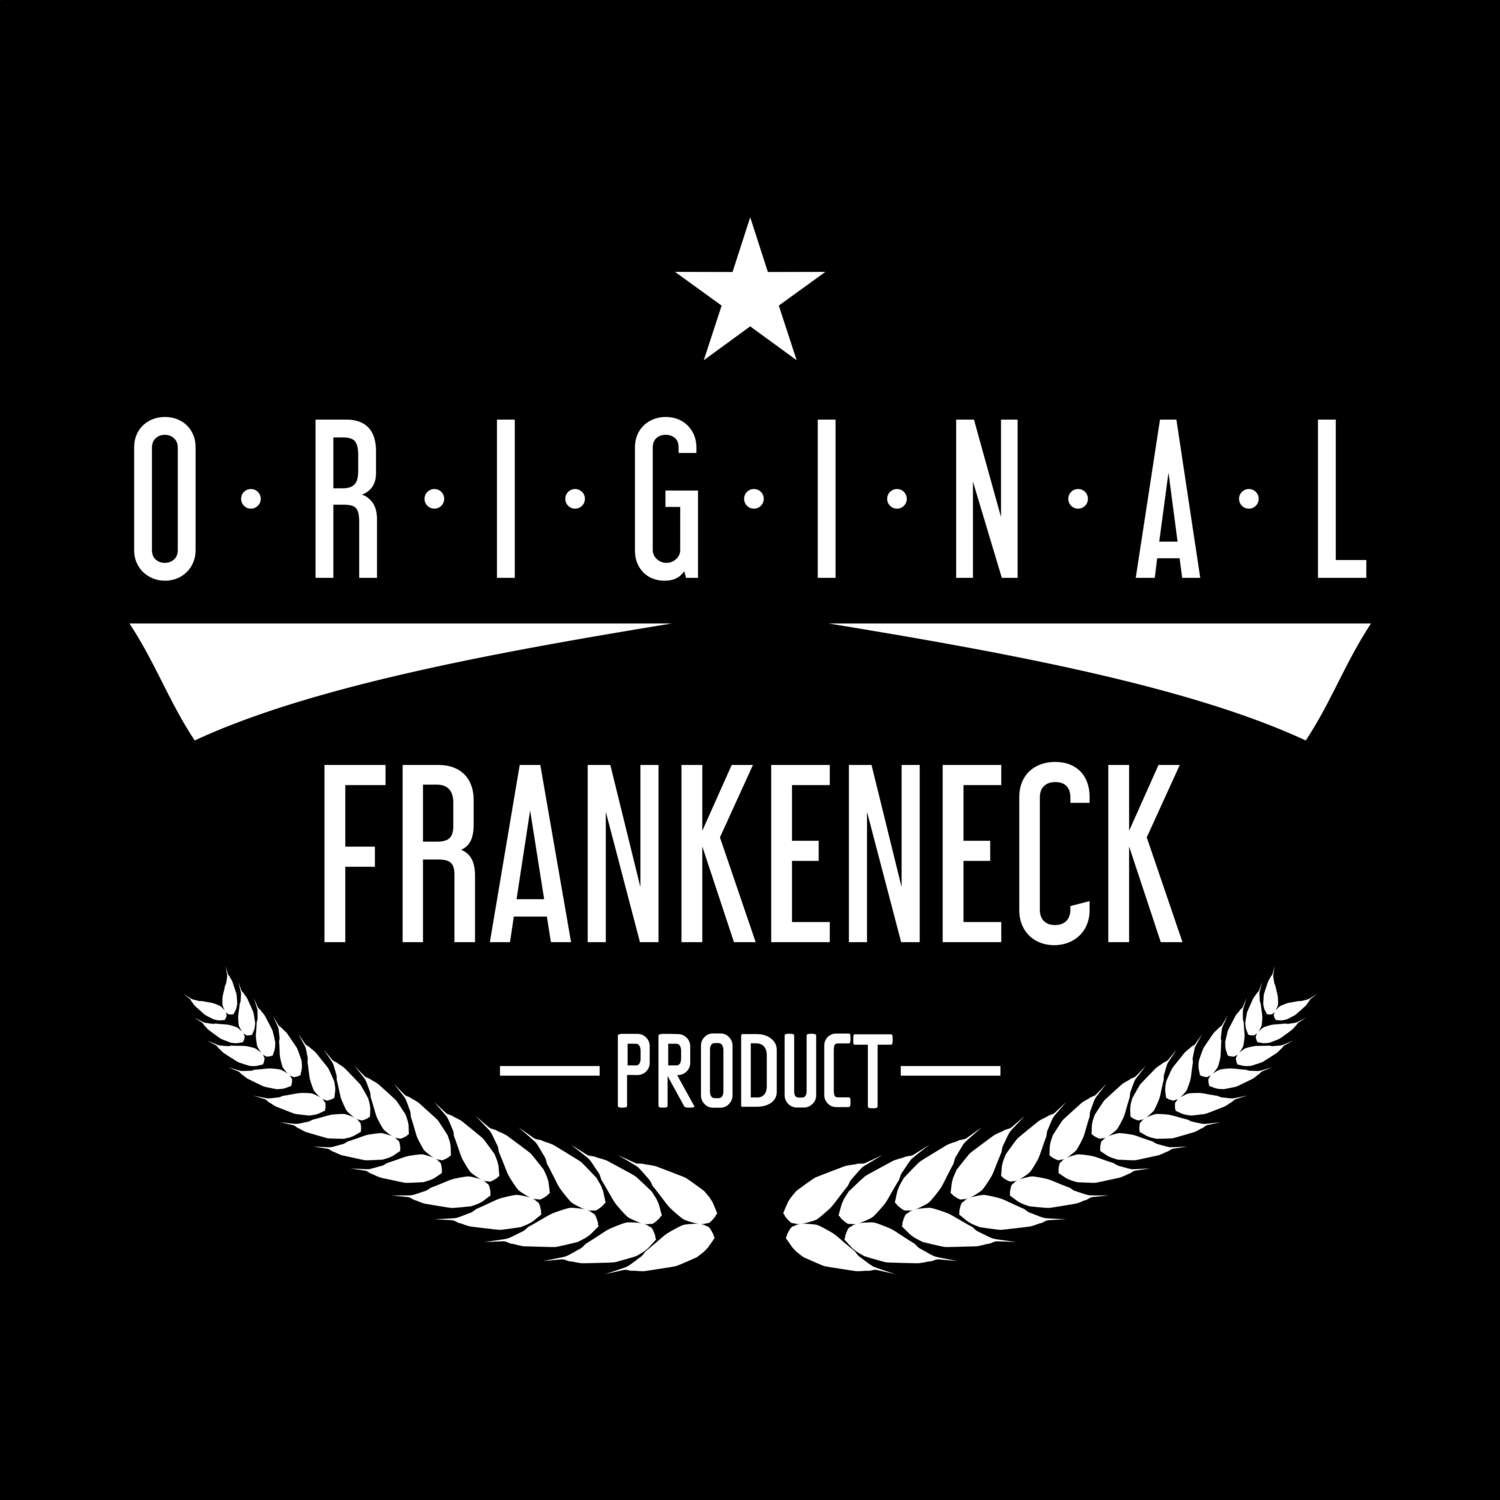 Frankeneck T-Shirt »Original Product«